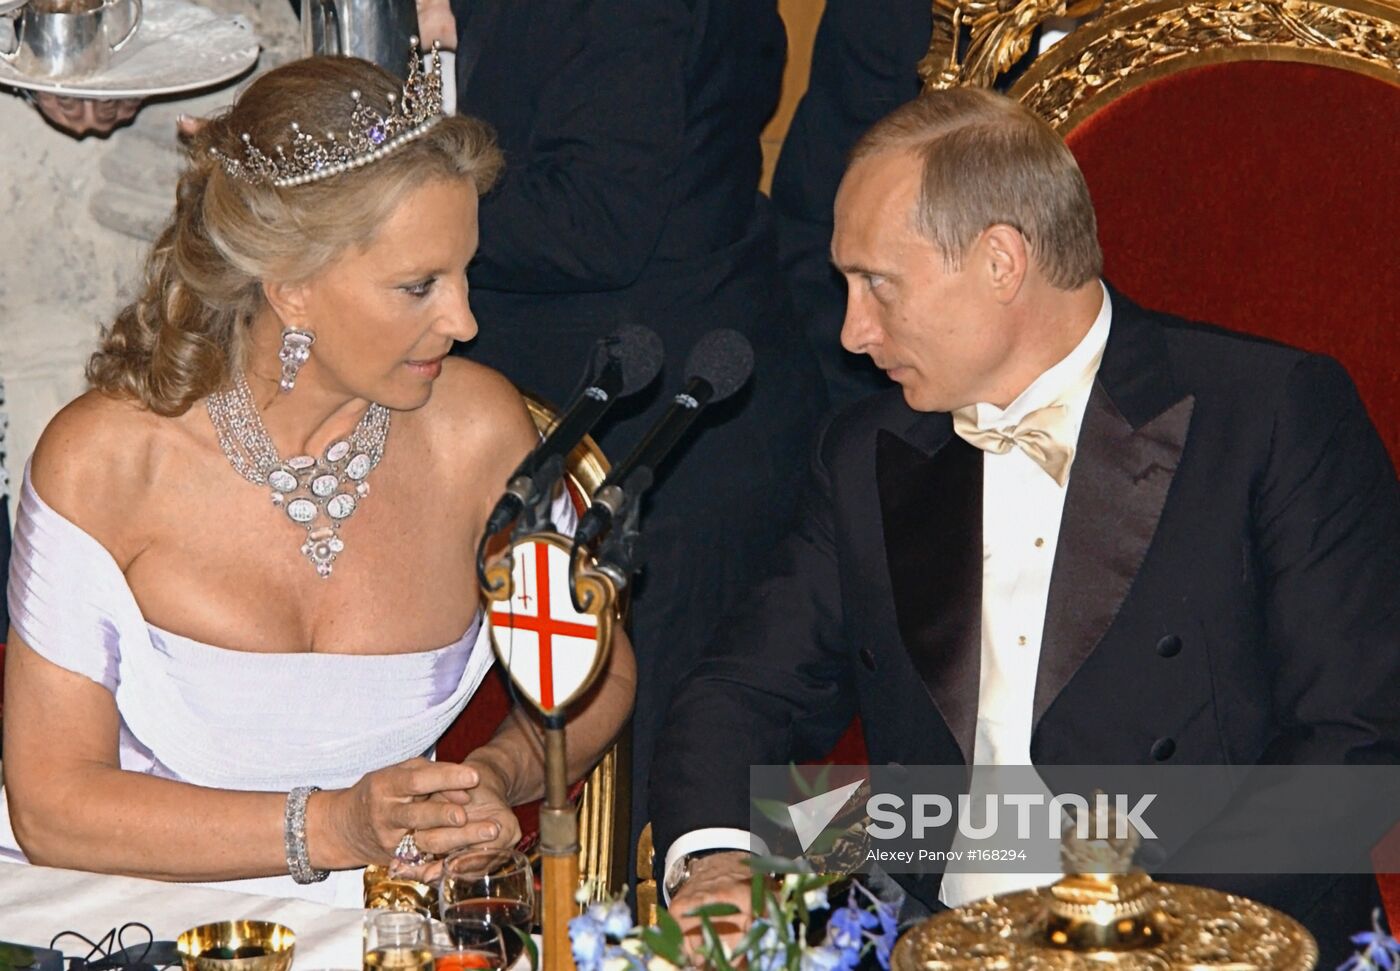 Putin, princess of Kent, conversation, London Guildhall, dinner